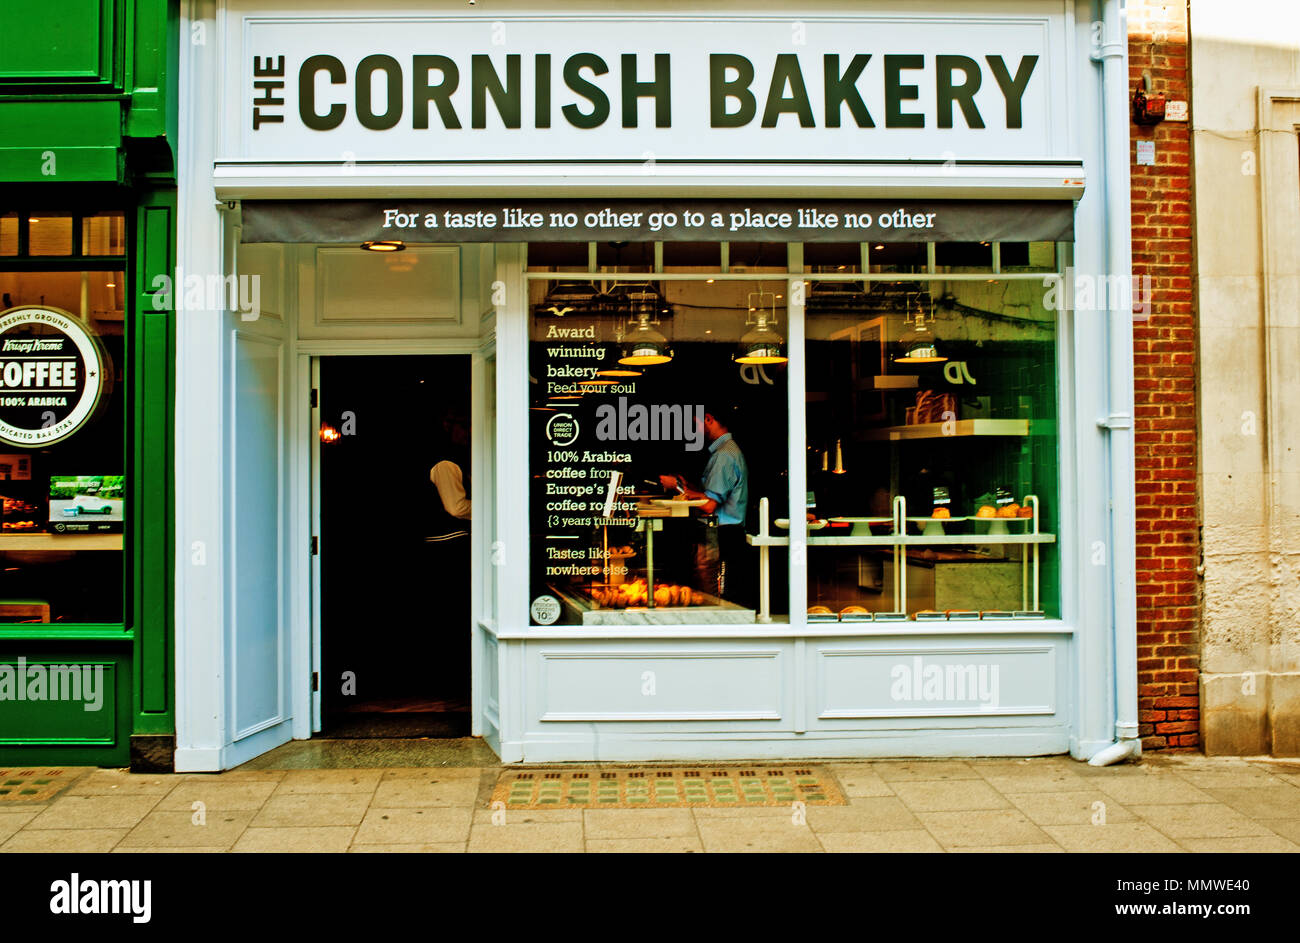 Cornish Bakery shop, Coney street, York Stock Photo